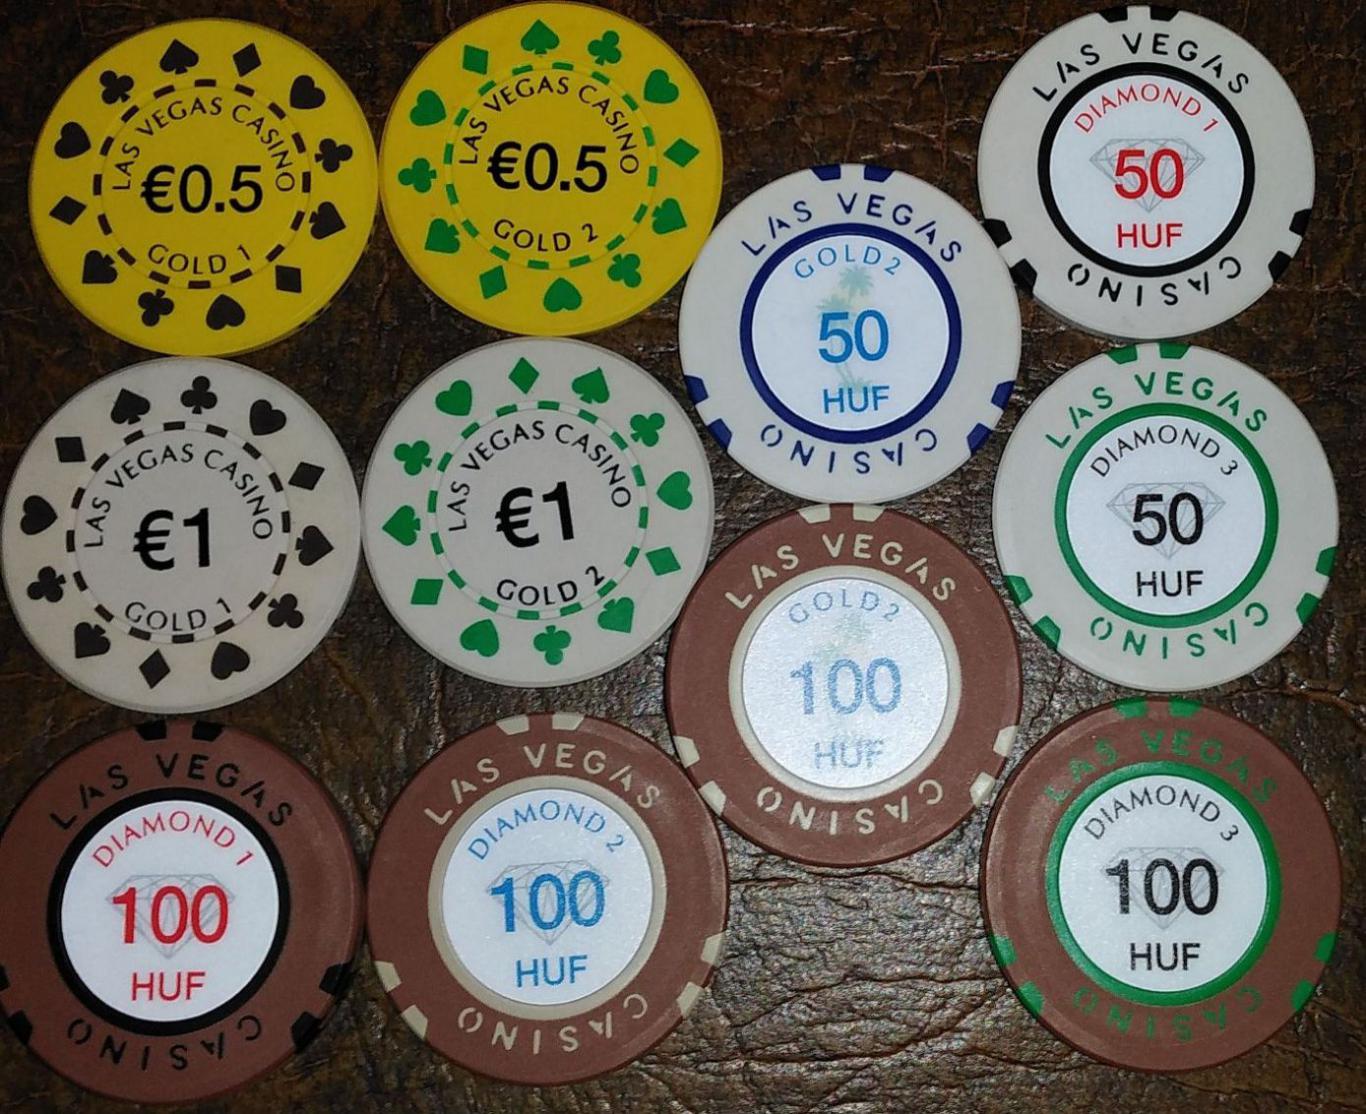 Casino chips Hungary BudaPest 11 items